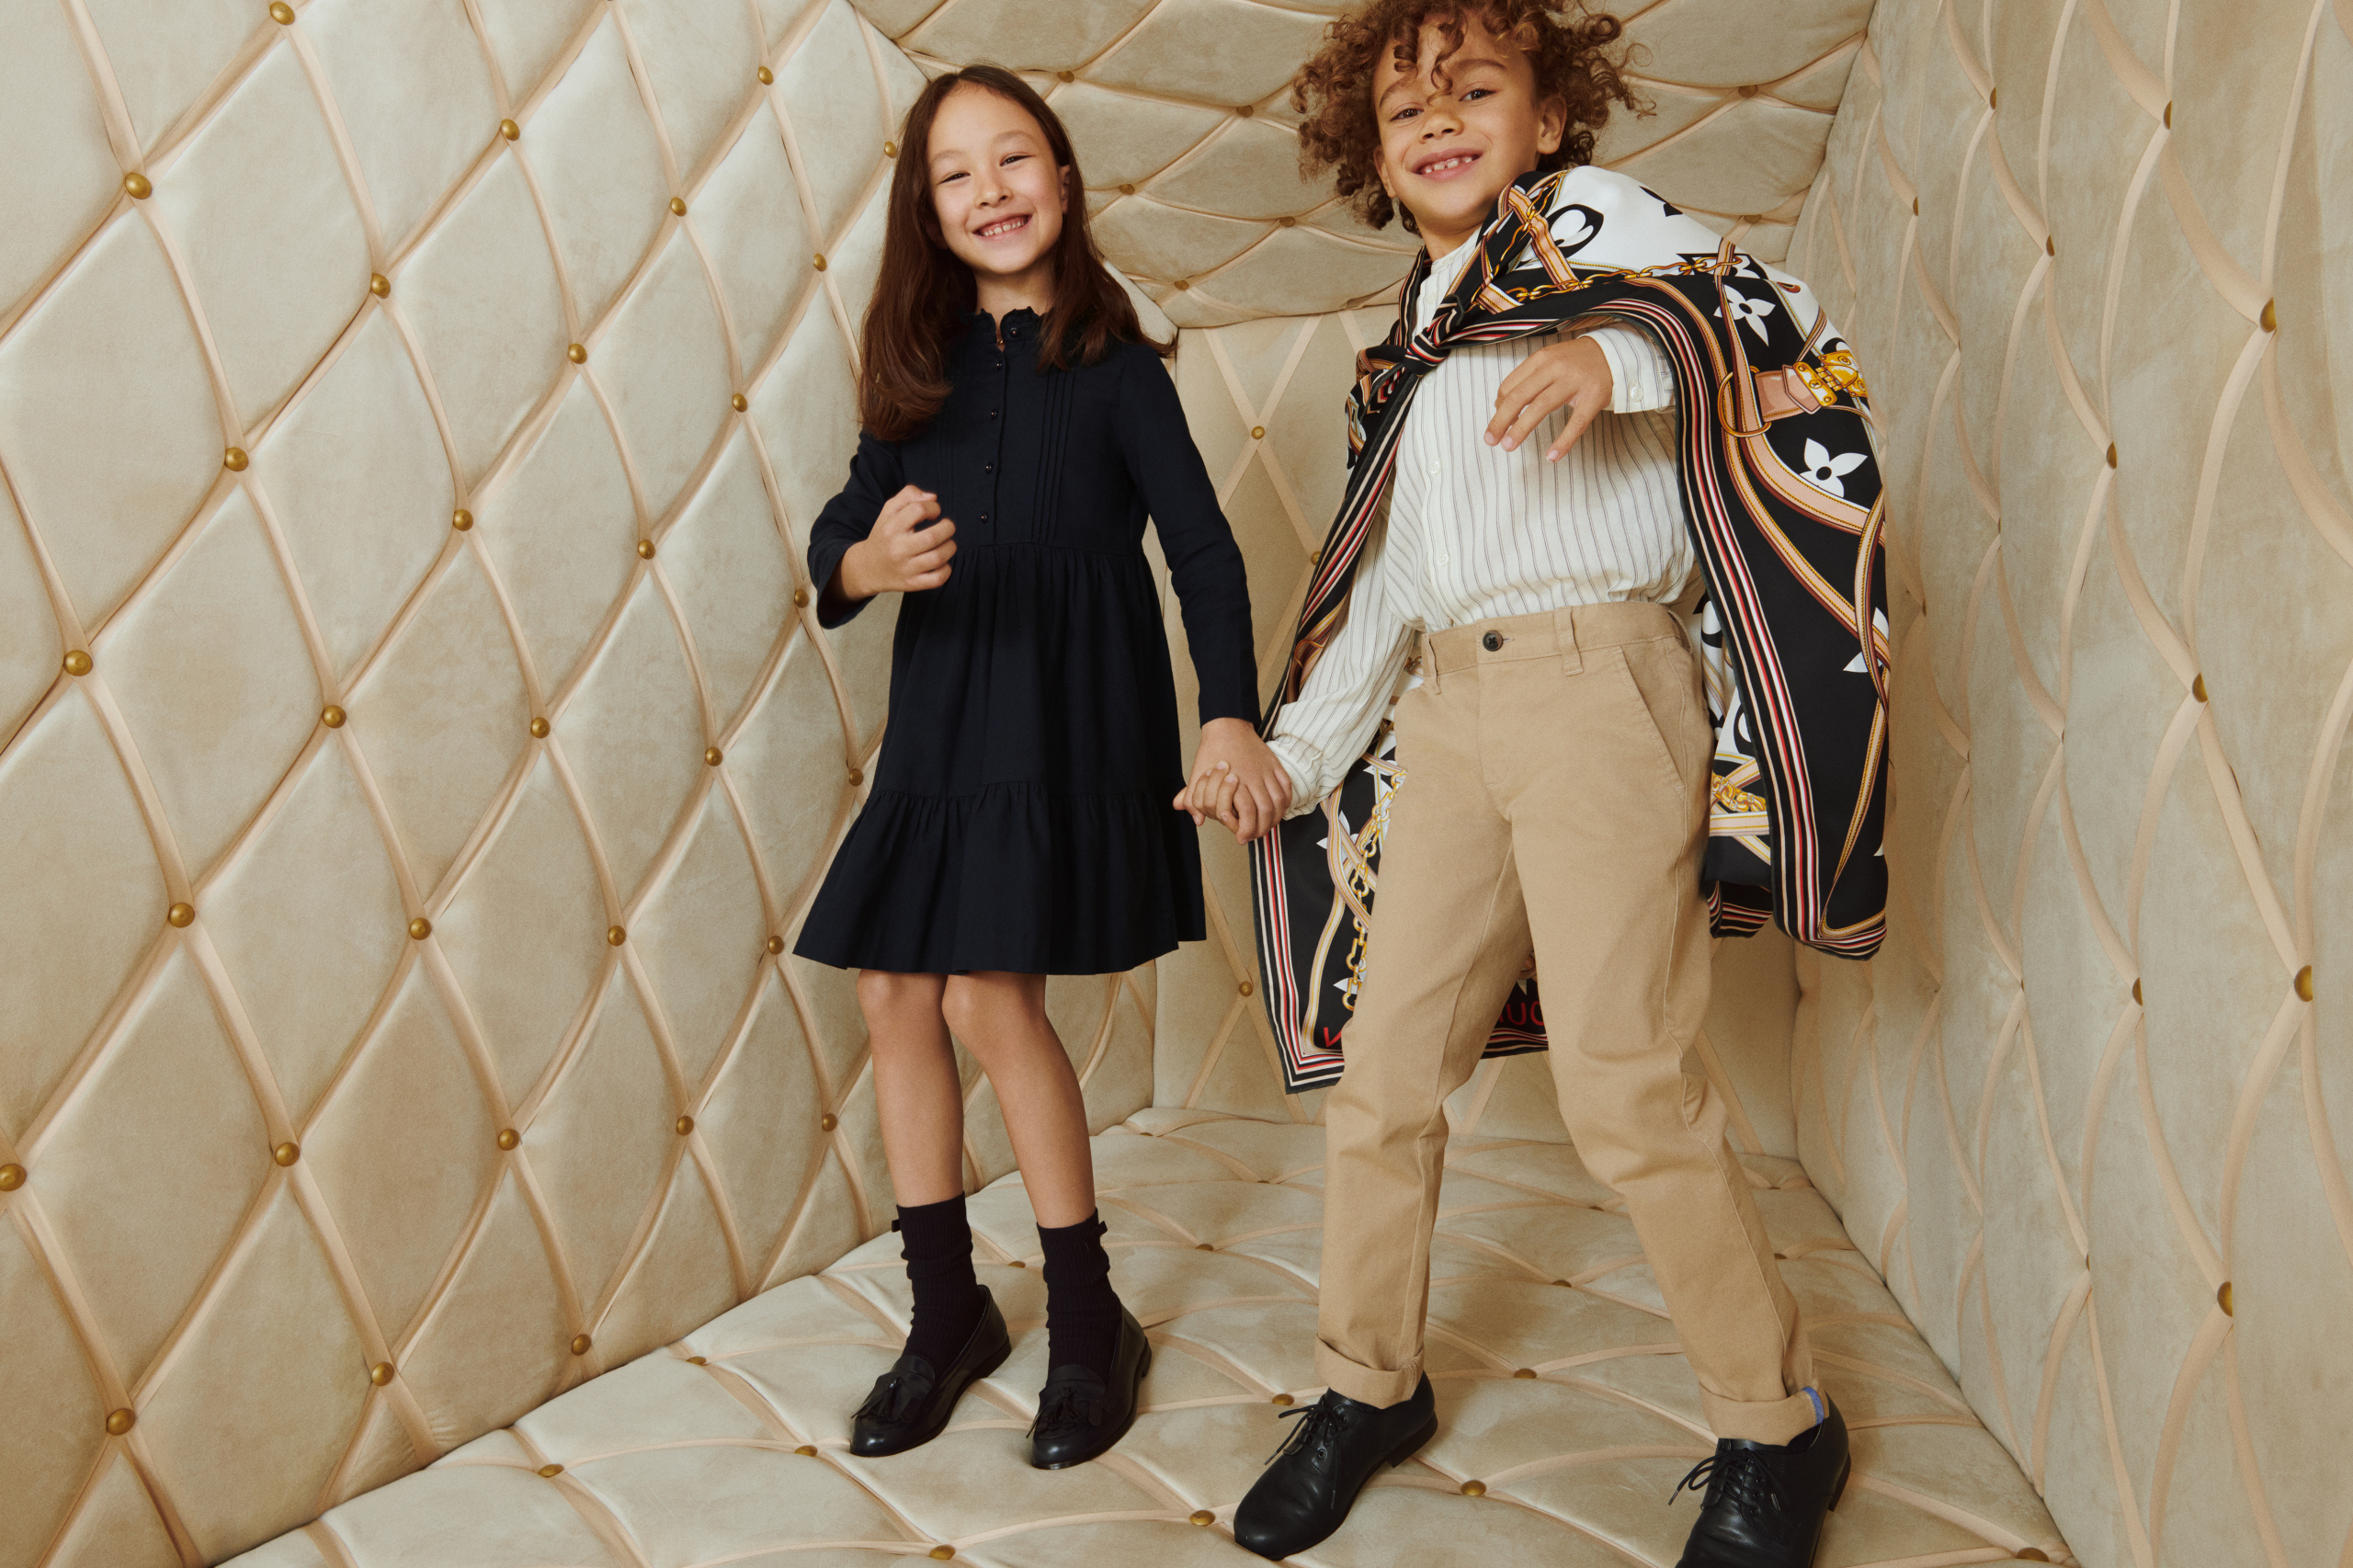 Louis Vuitton Kids 